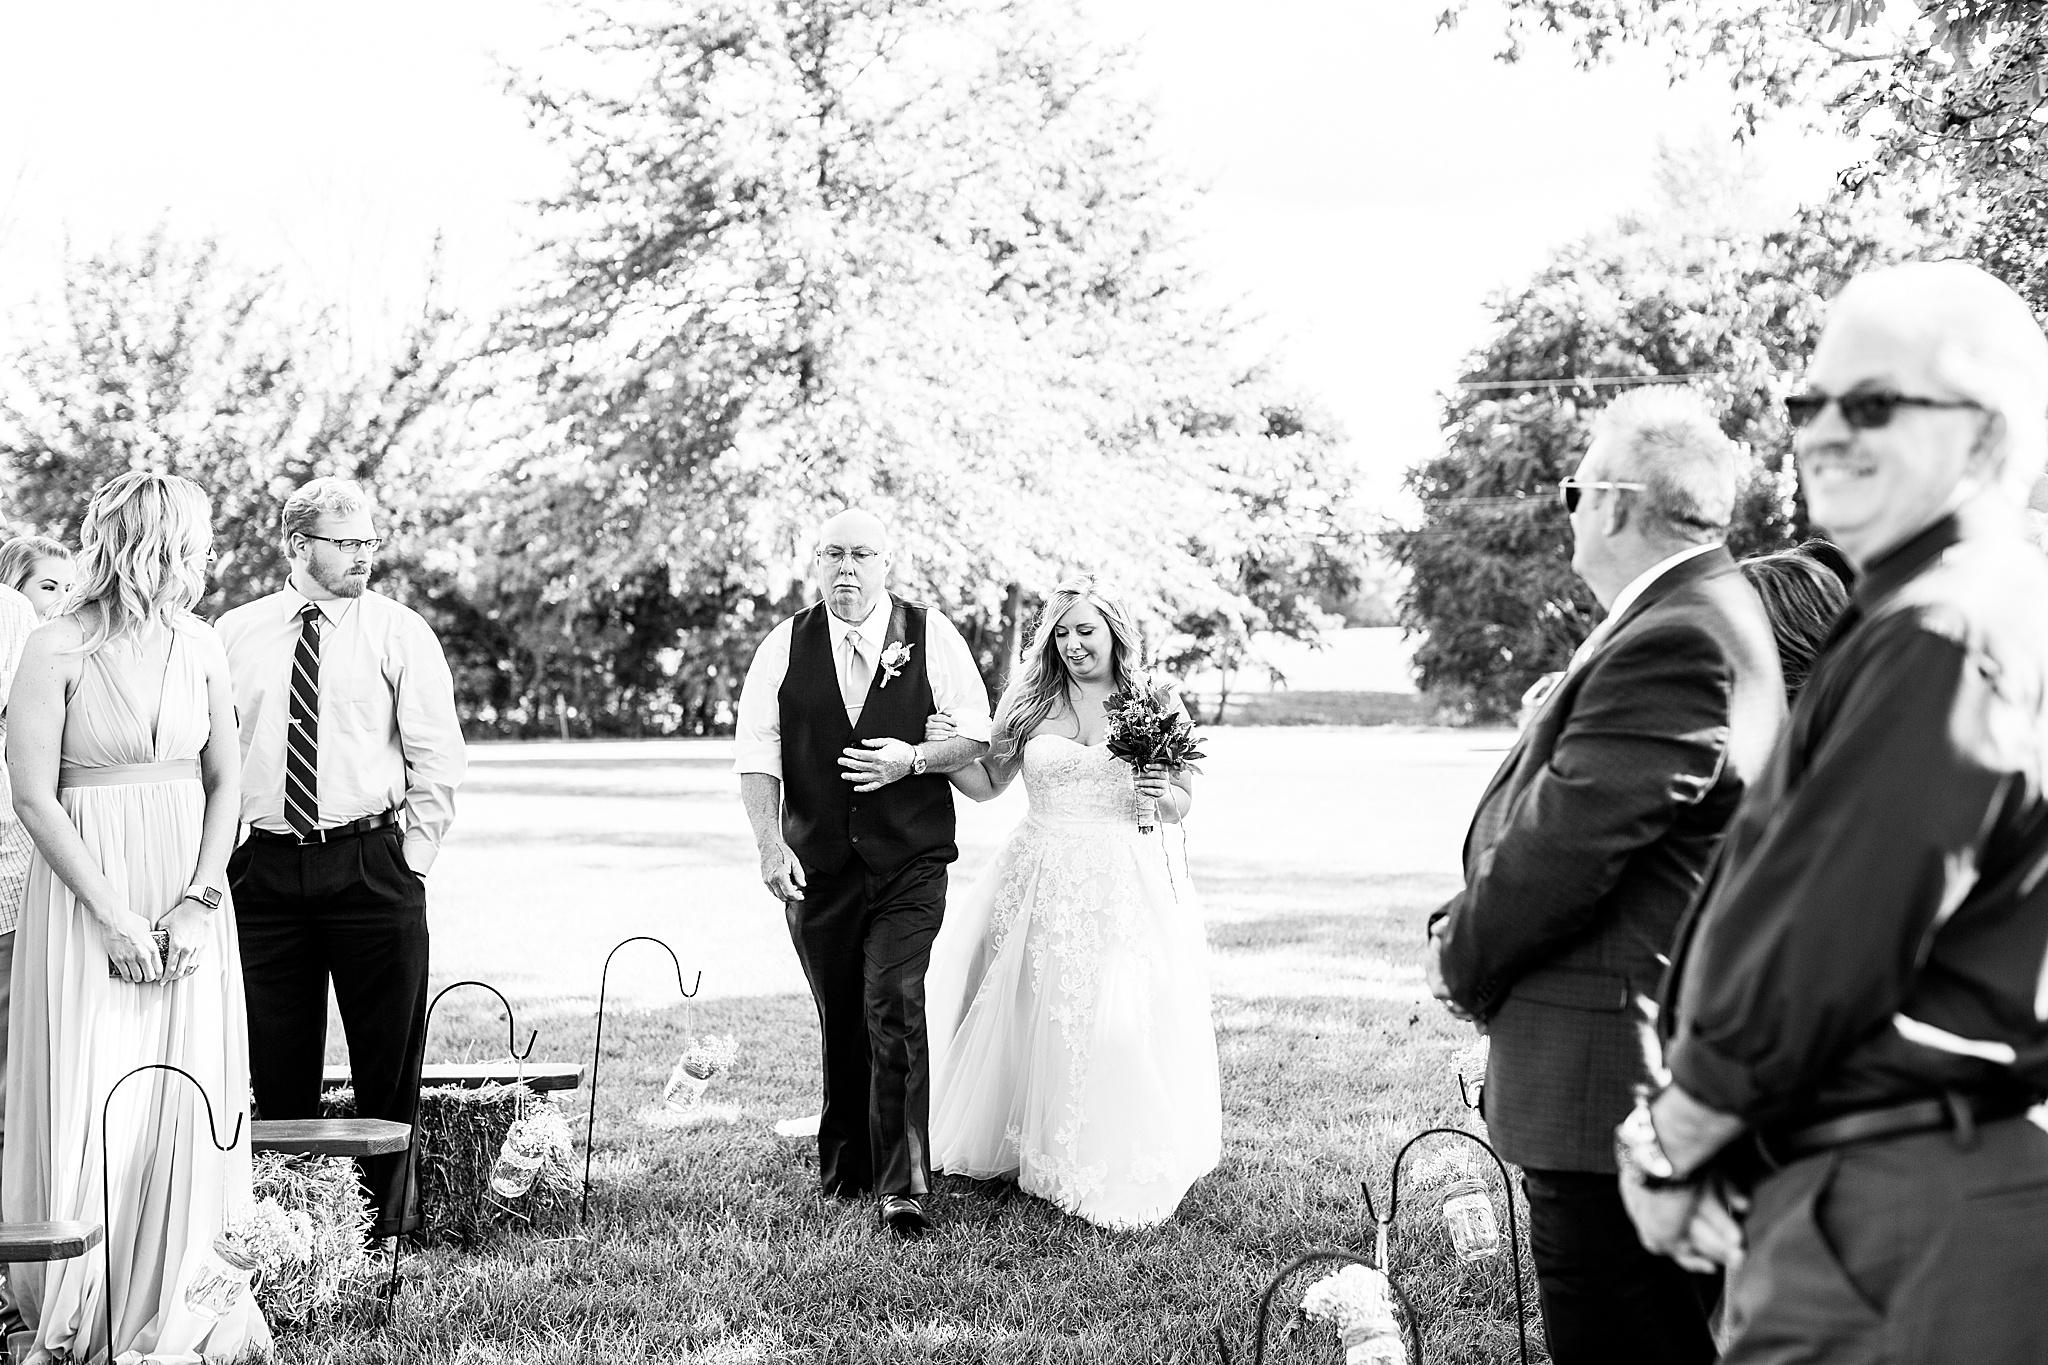 Green Meadows Farm wedding ceremony photographed by Alexandra Mandato Photography